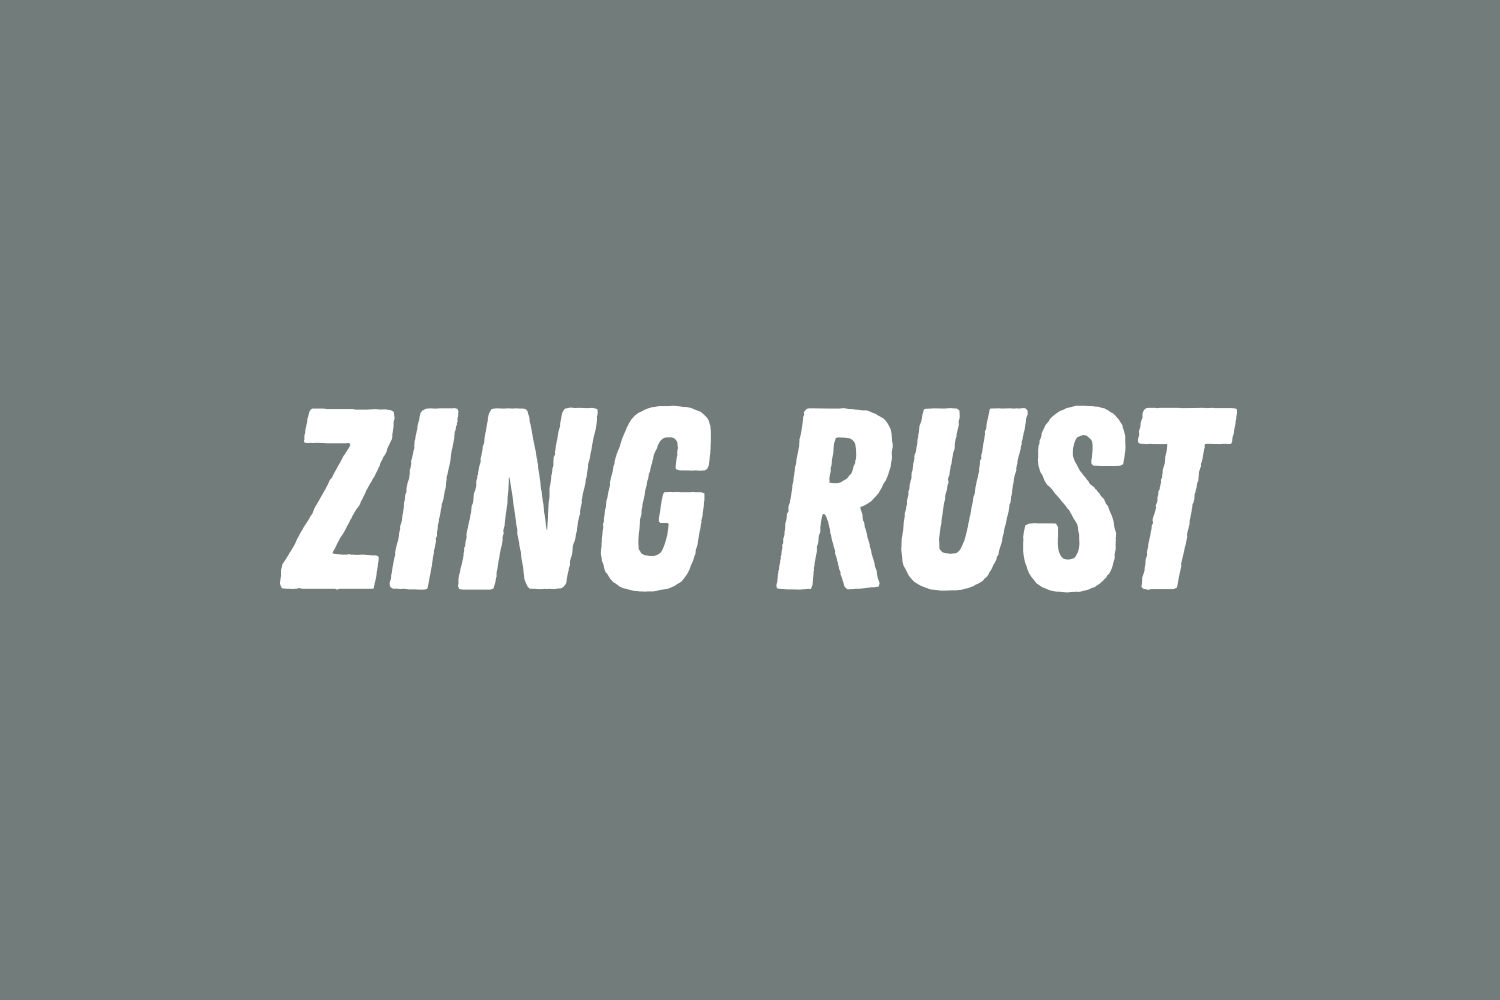 Zing script rust base фото 12